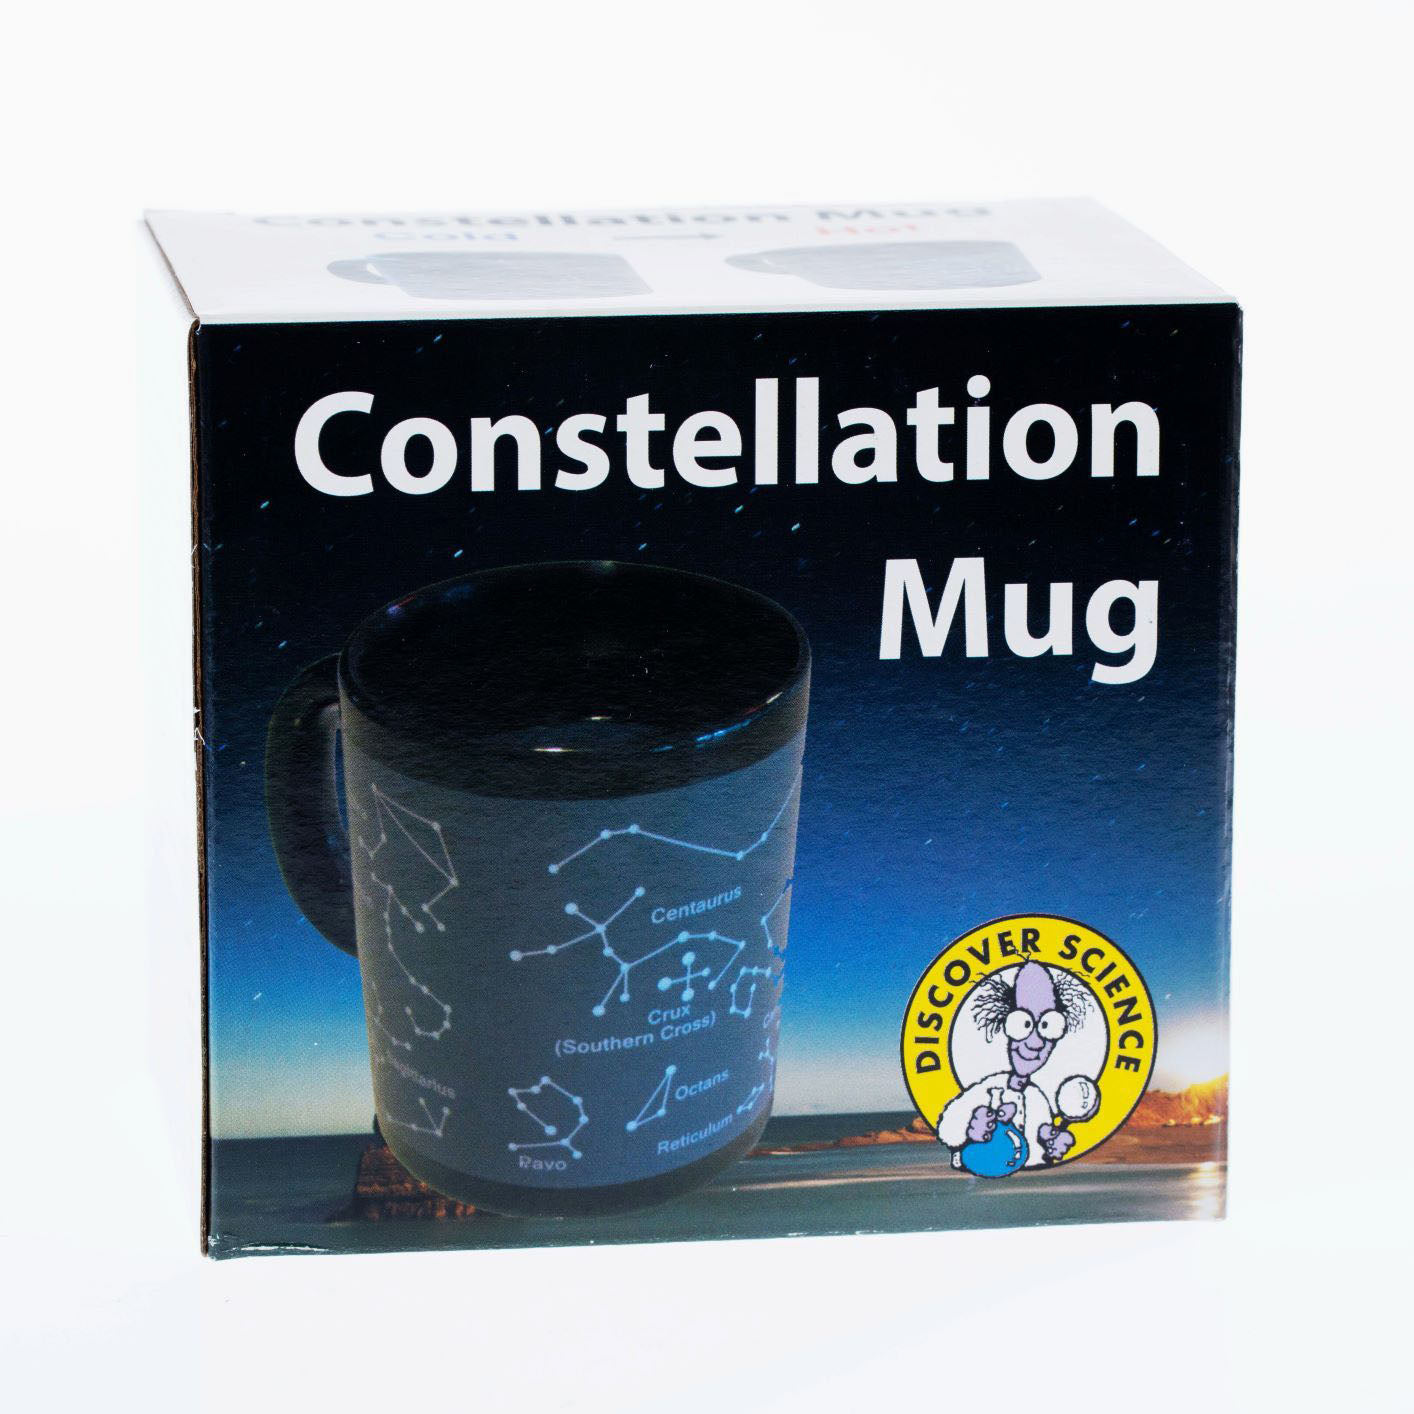 ConstellationMug1.jpg